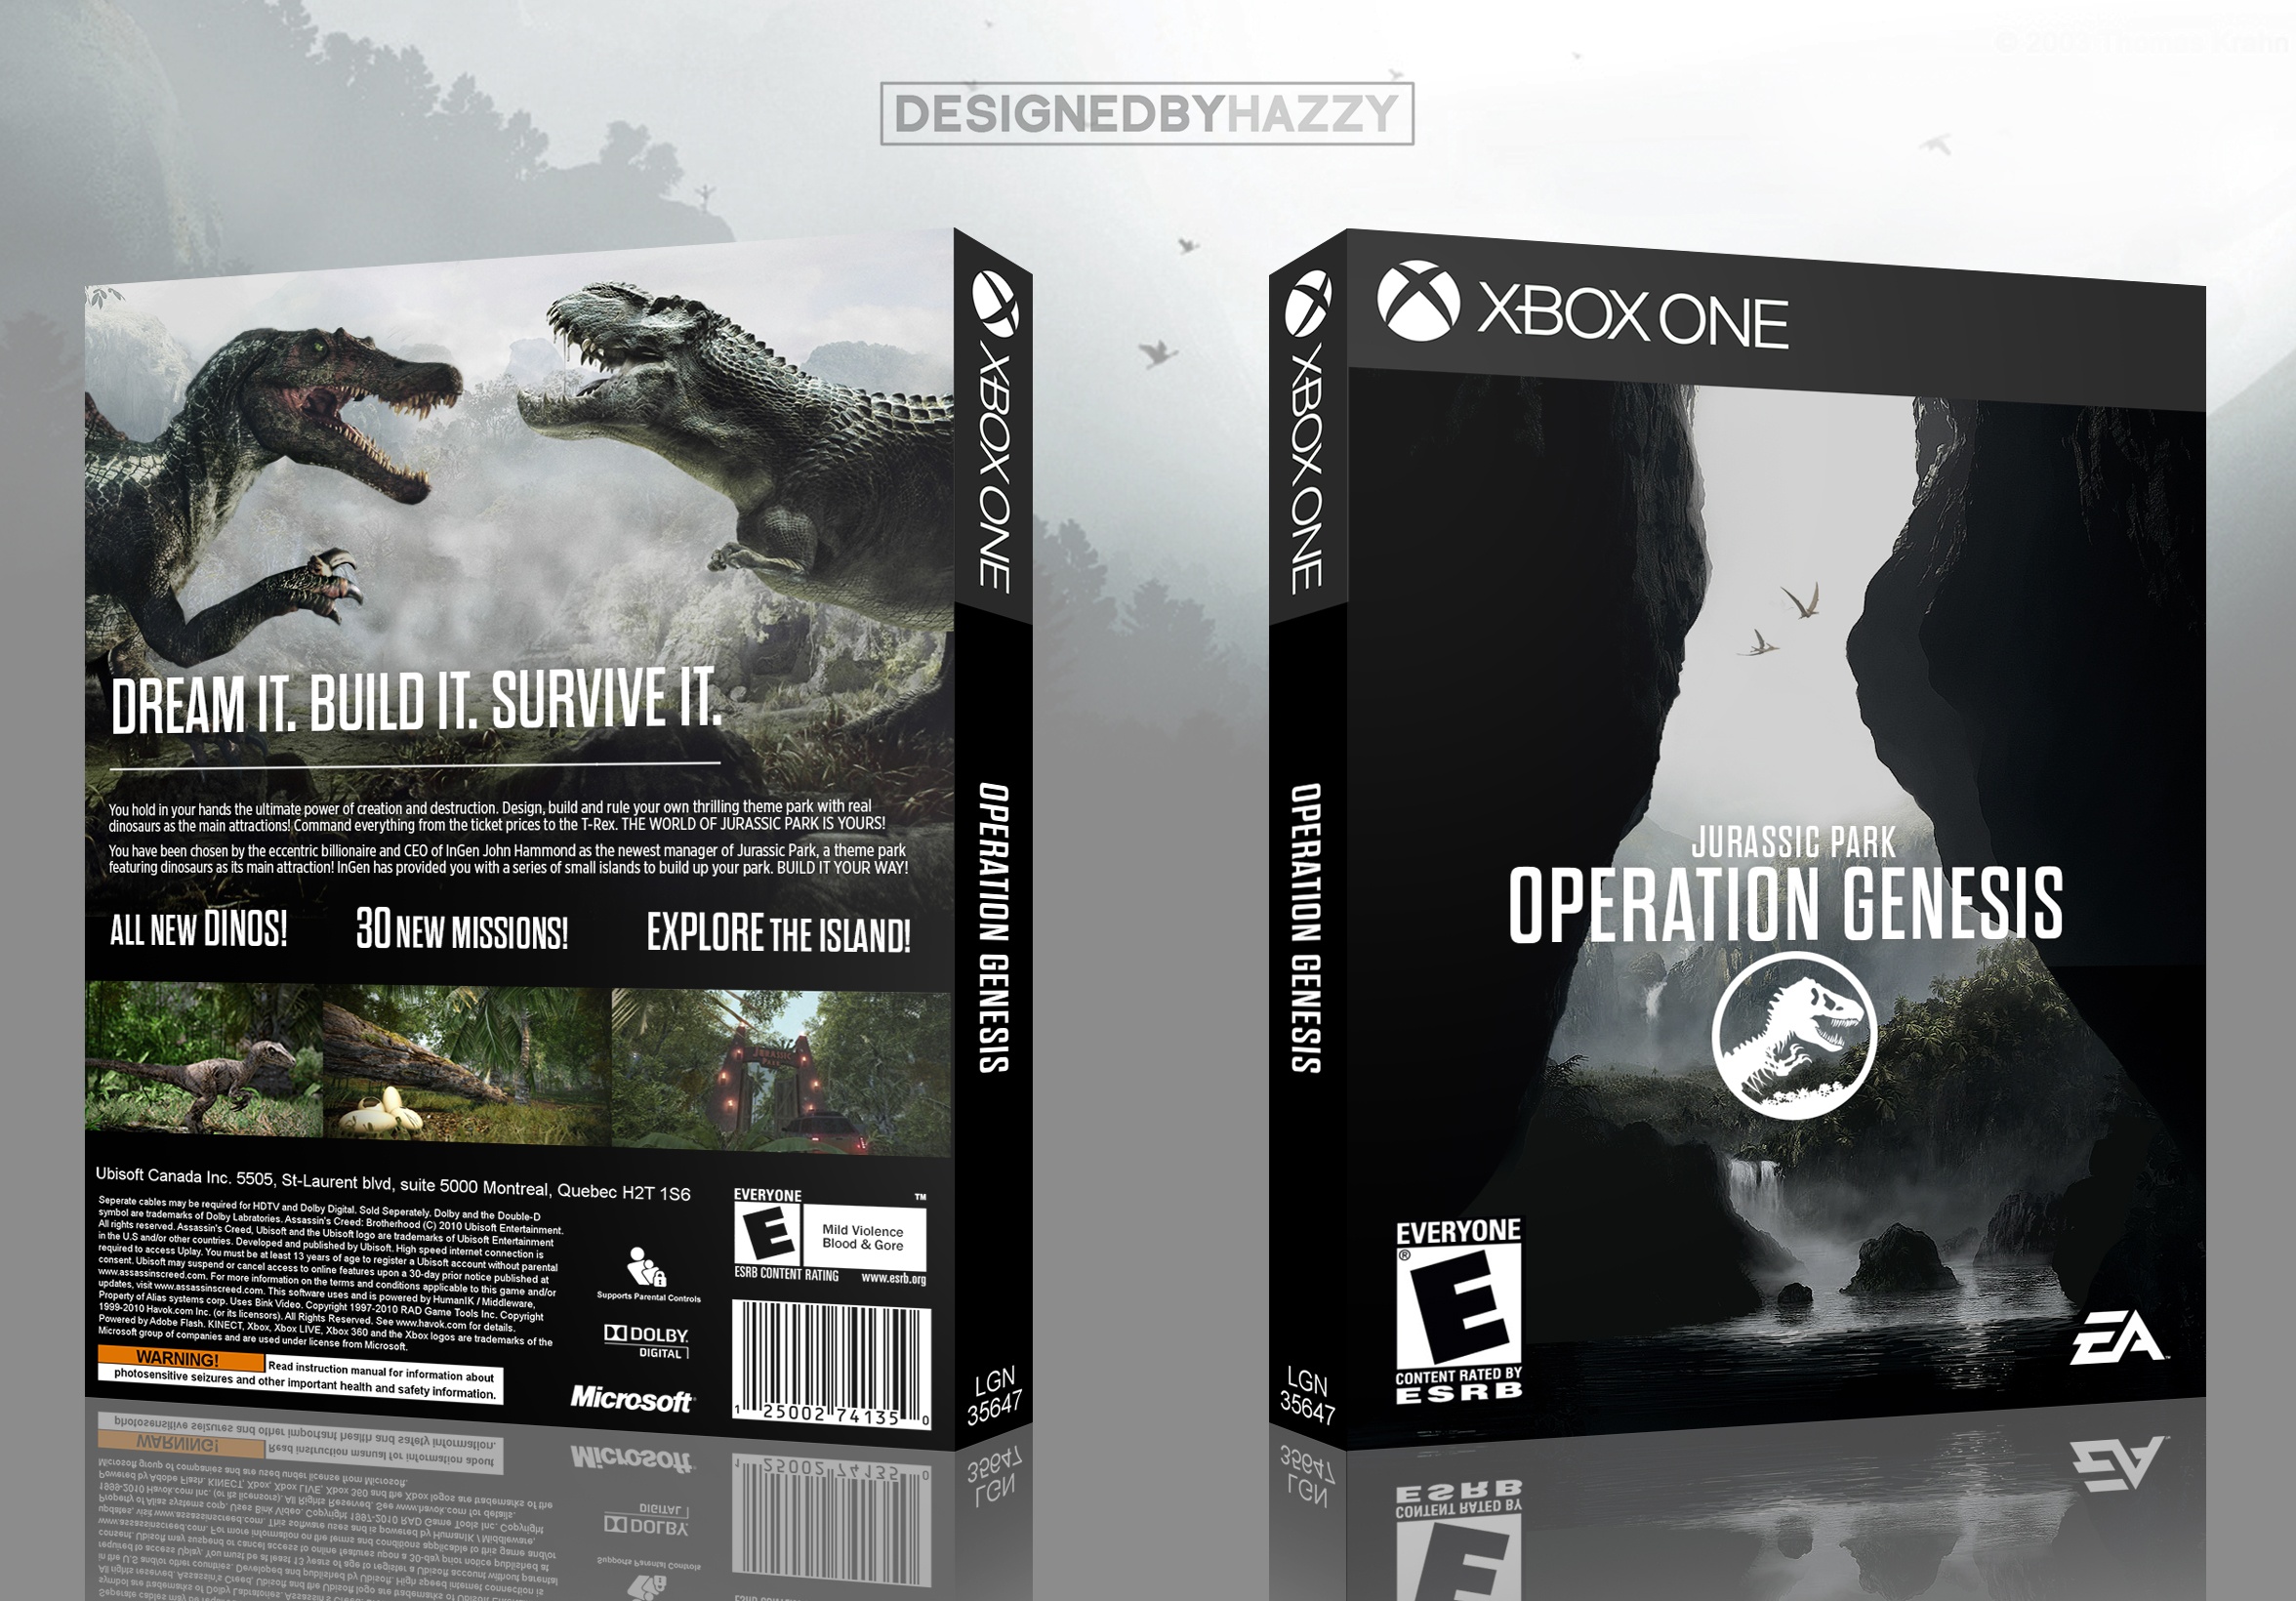 Jurassic Park Operation Genesis box cover